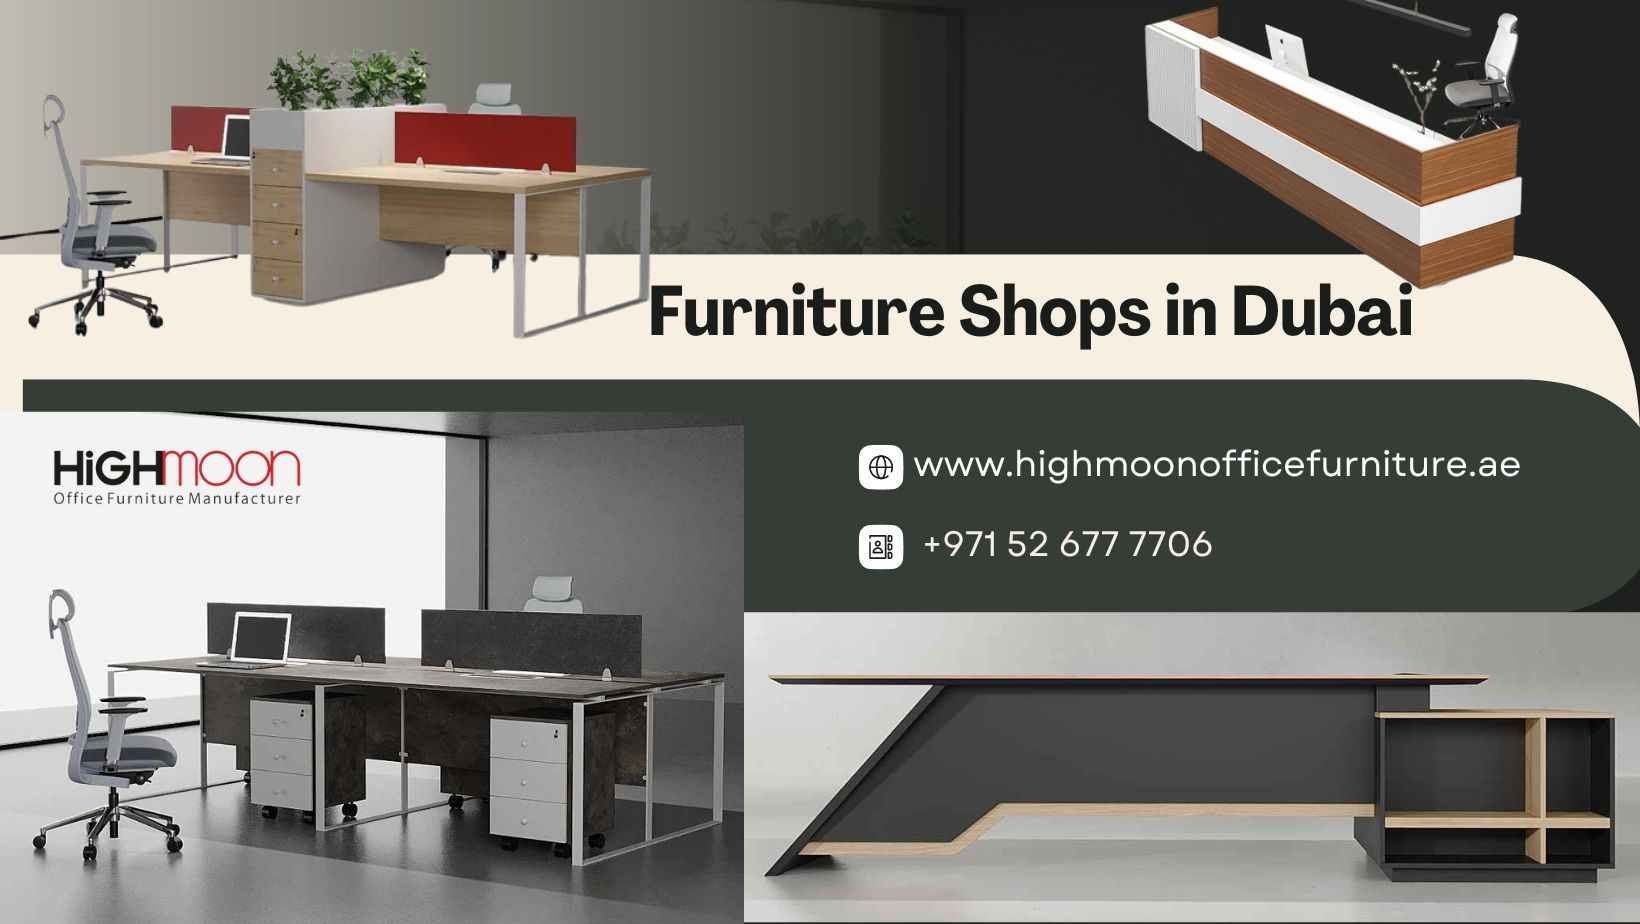 Furniture Shops in Dubai – Highmoon Furniture Shop